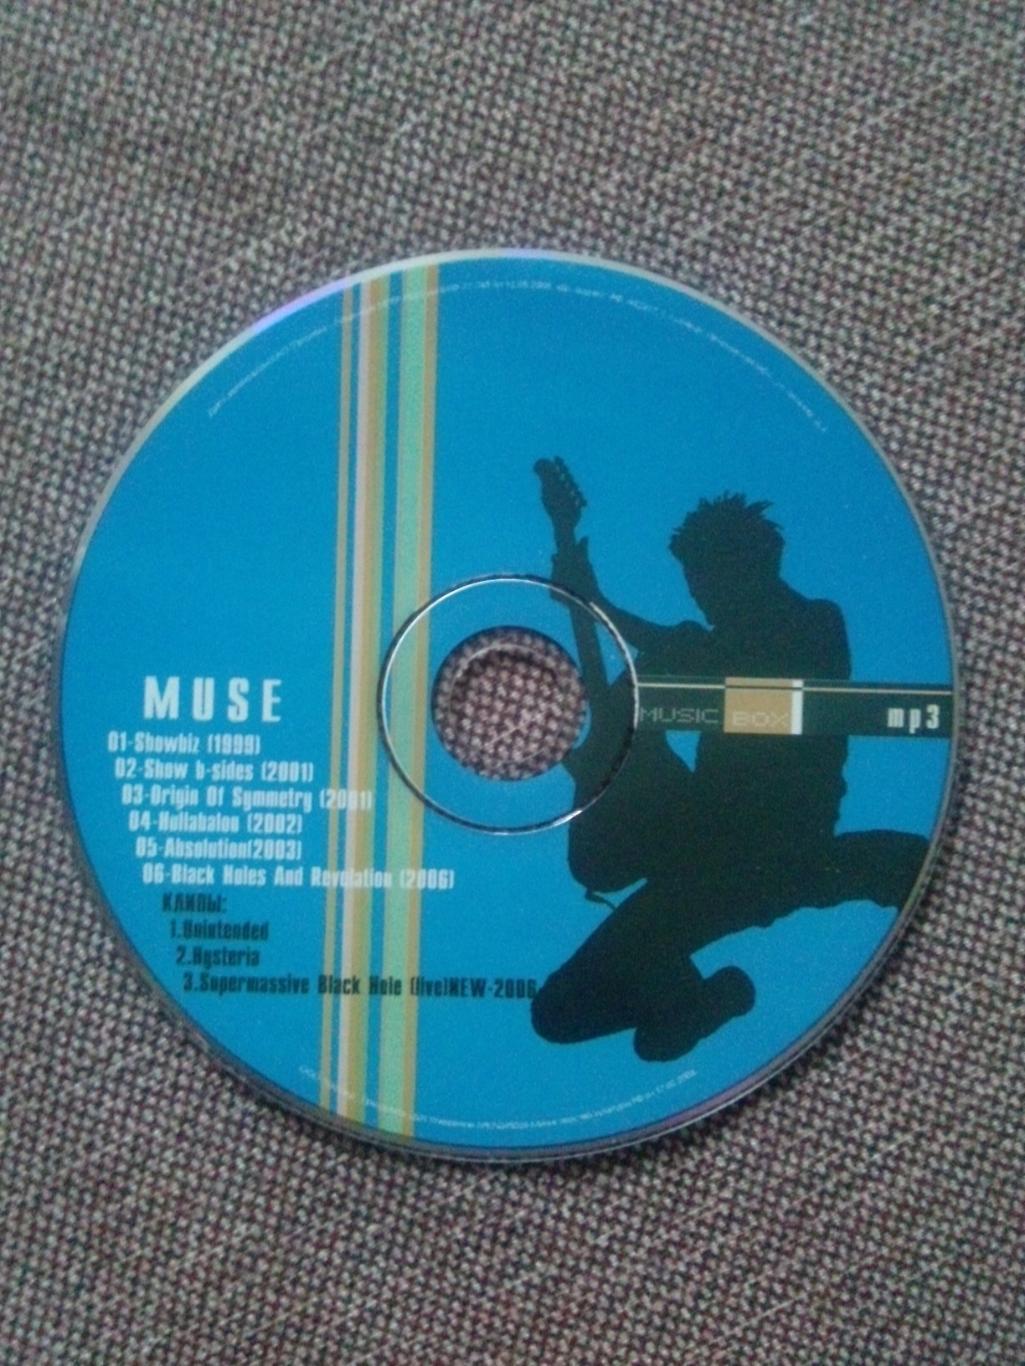 MP - 3 CD : группа Muse 1999 - 2006 гг. ( 6 альбомов) Рок - музыка 2